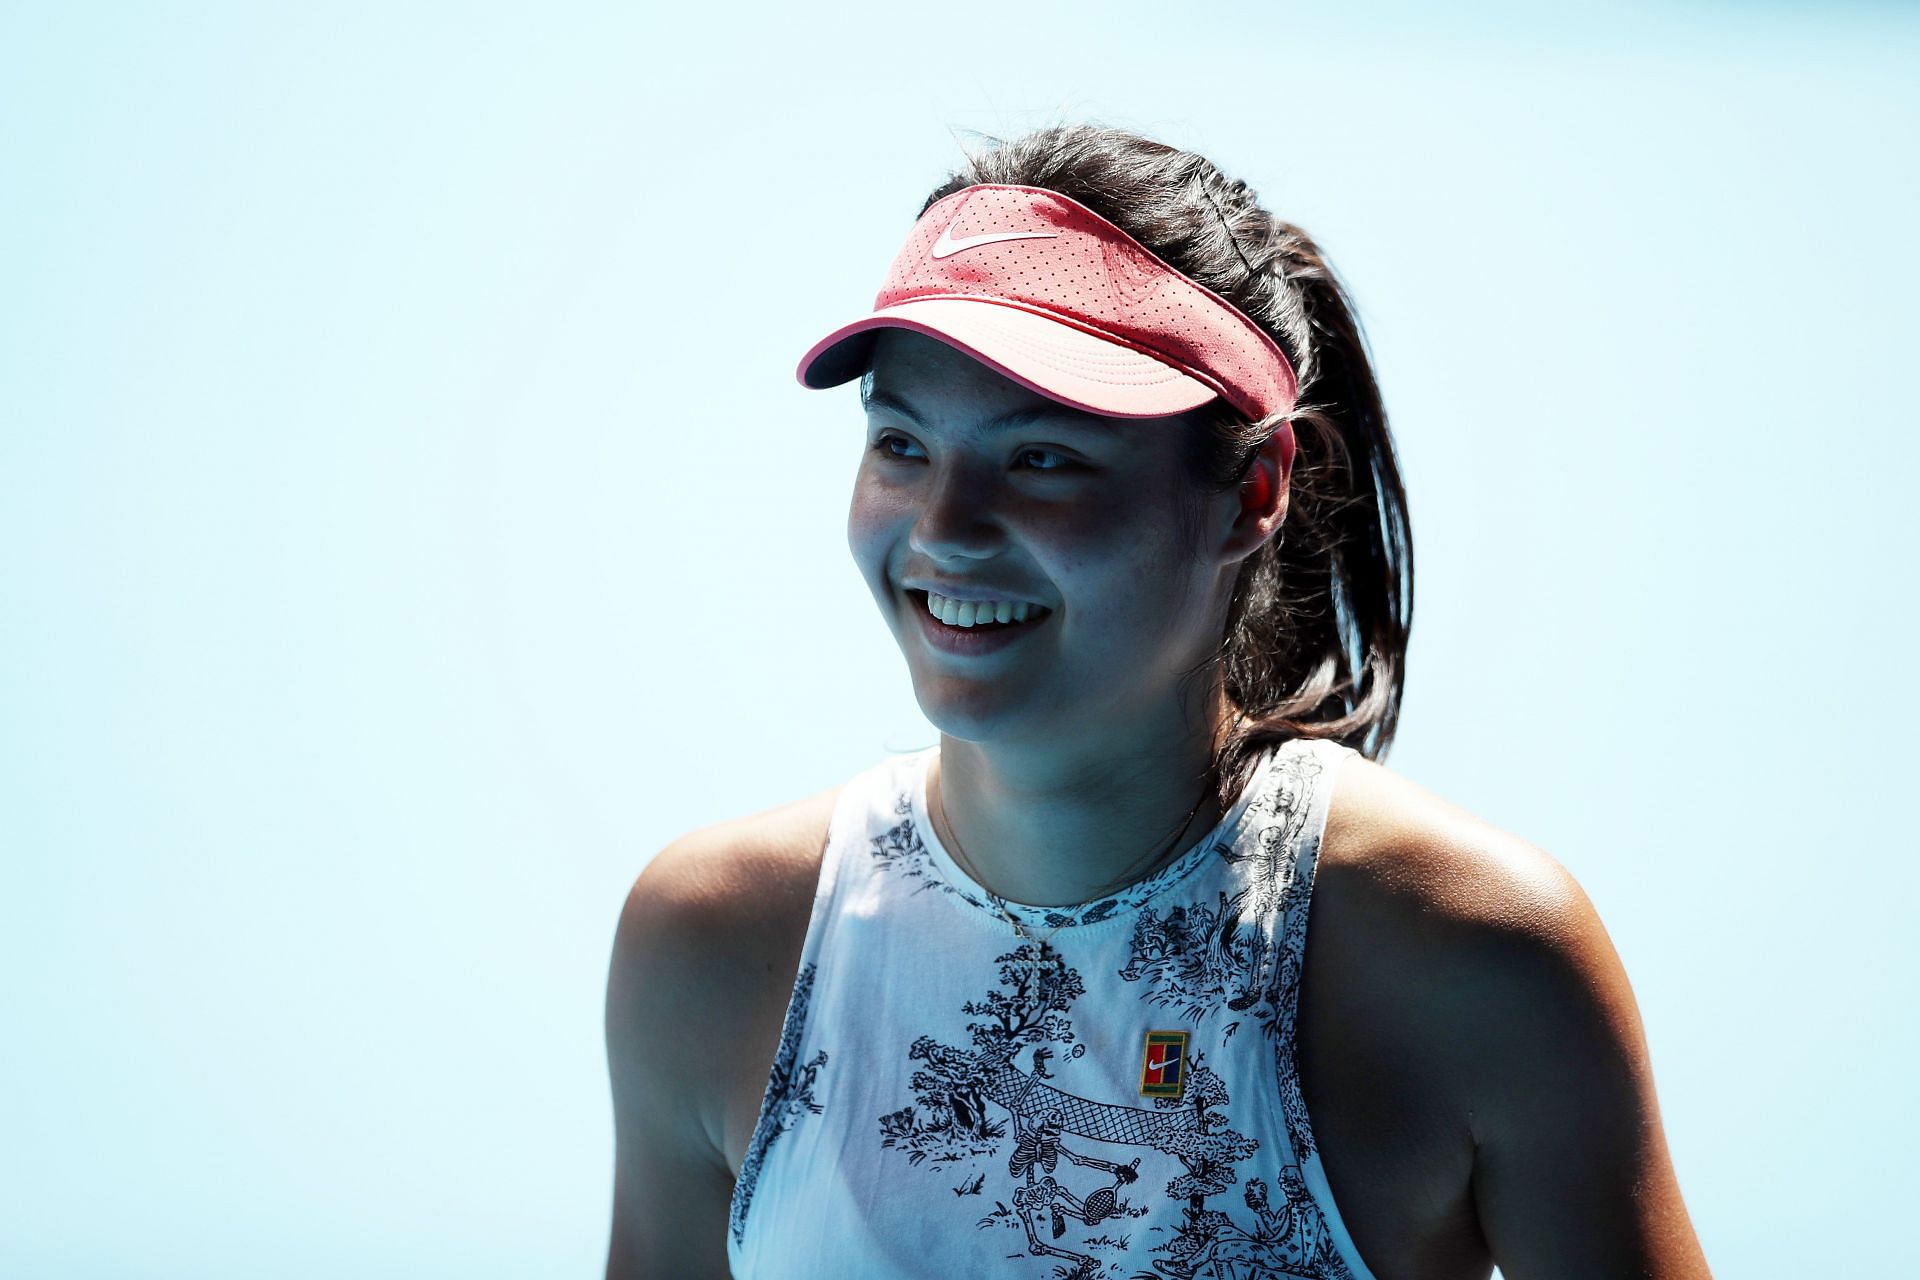 Emma Raducanu is set to start her 2022 season at the Sydney Tennis Classic.